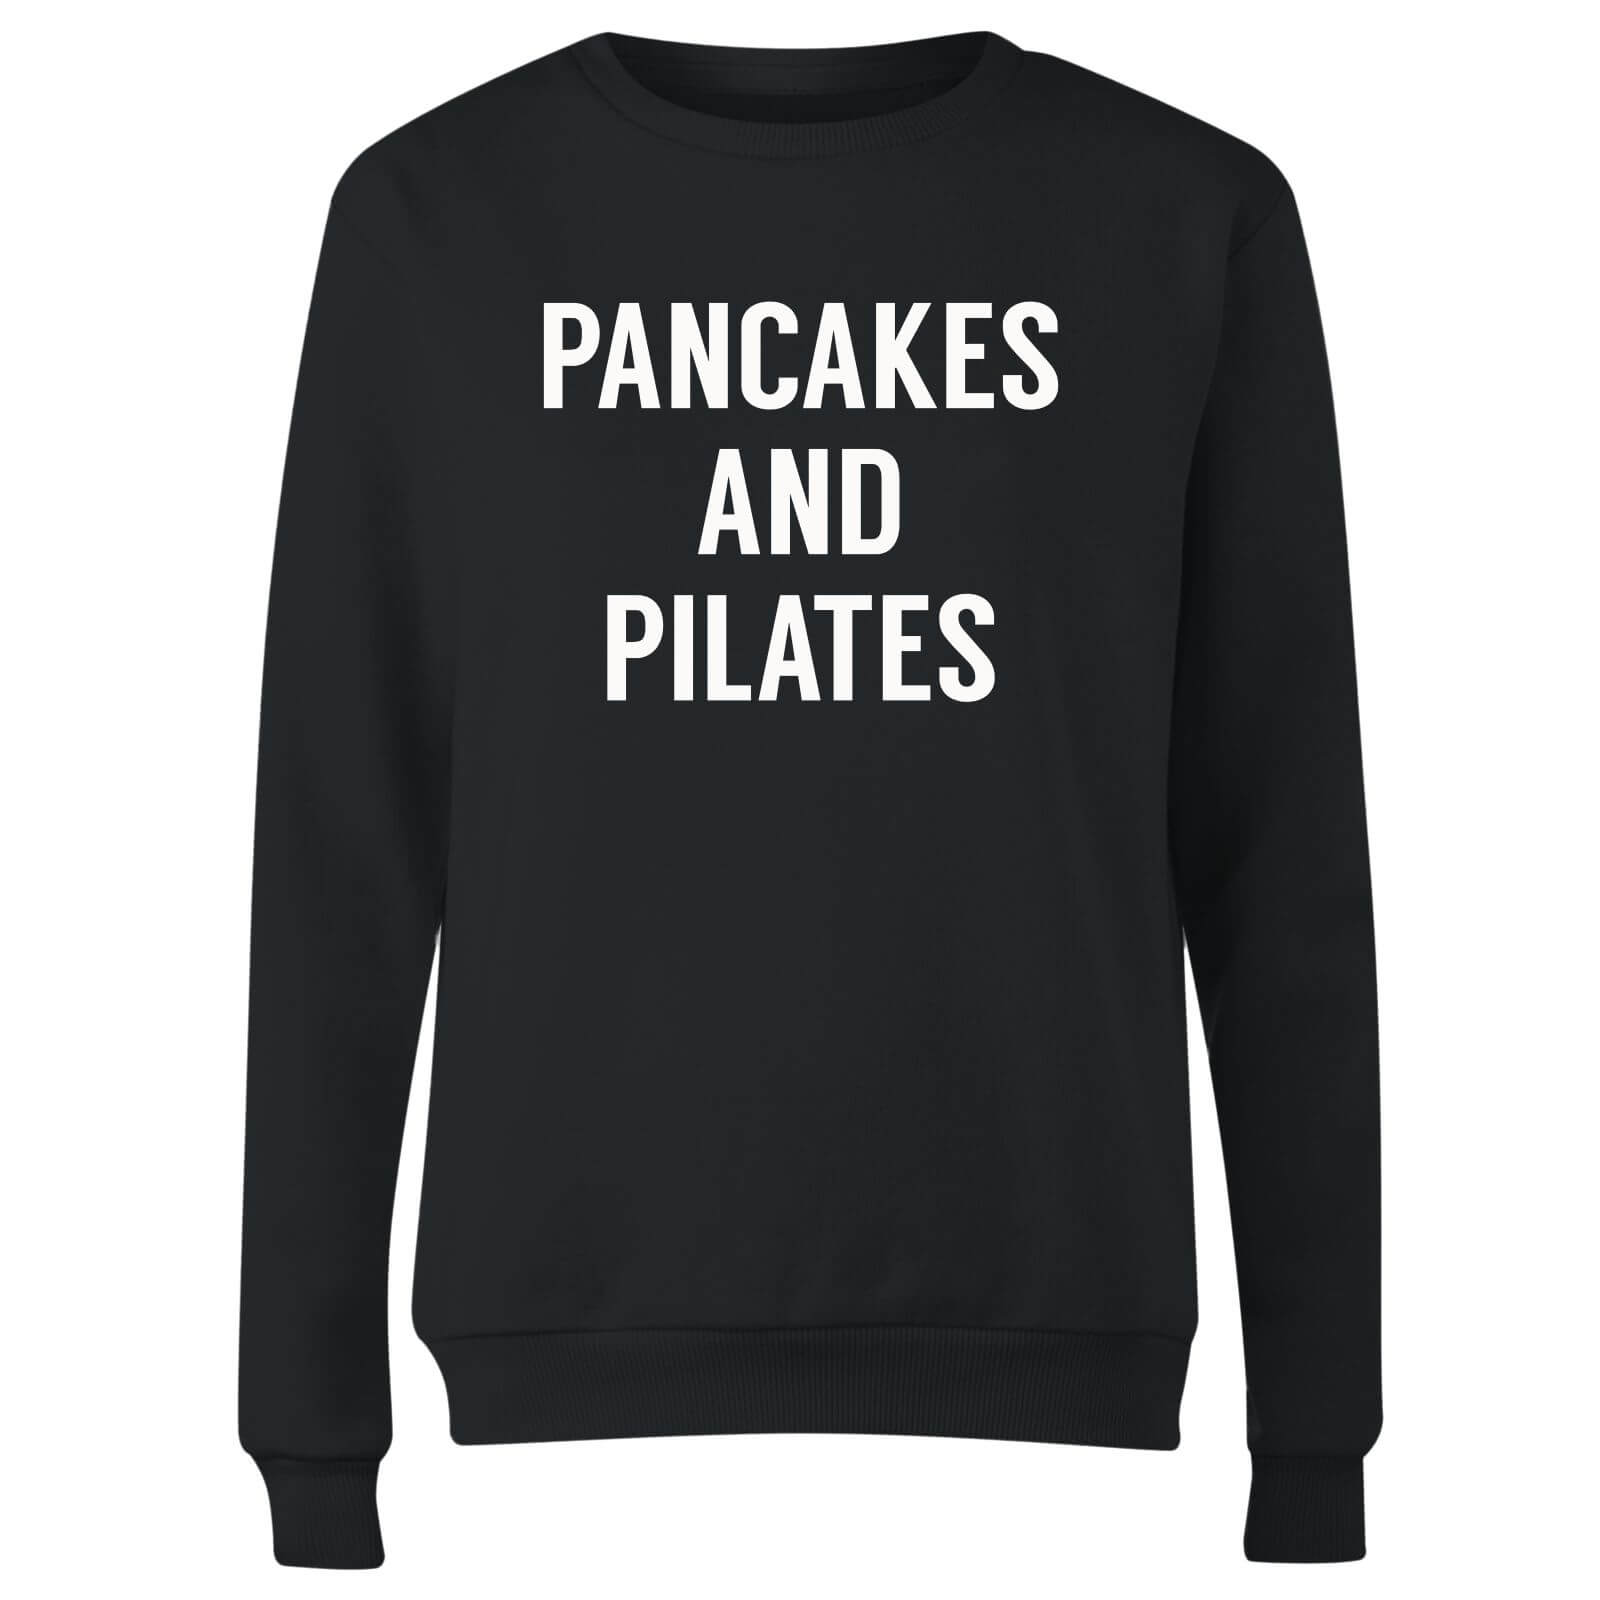 Pancakes and Pilates Women's Sweatshirt - Black - 5XL - Noir